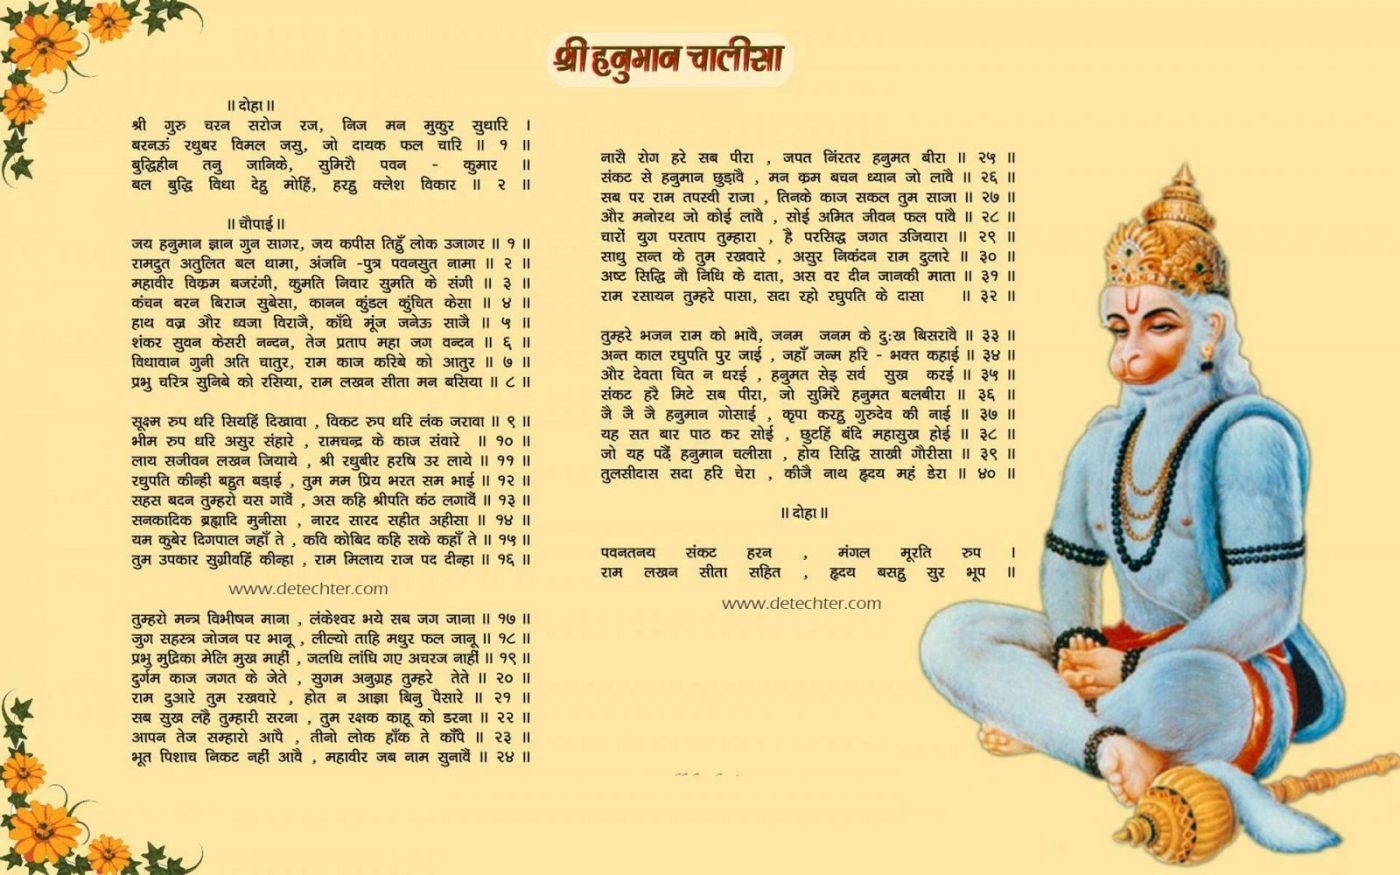 Hanuman Bajrang Baan And Hanuman Chalisa The State